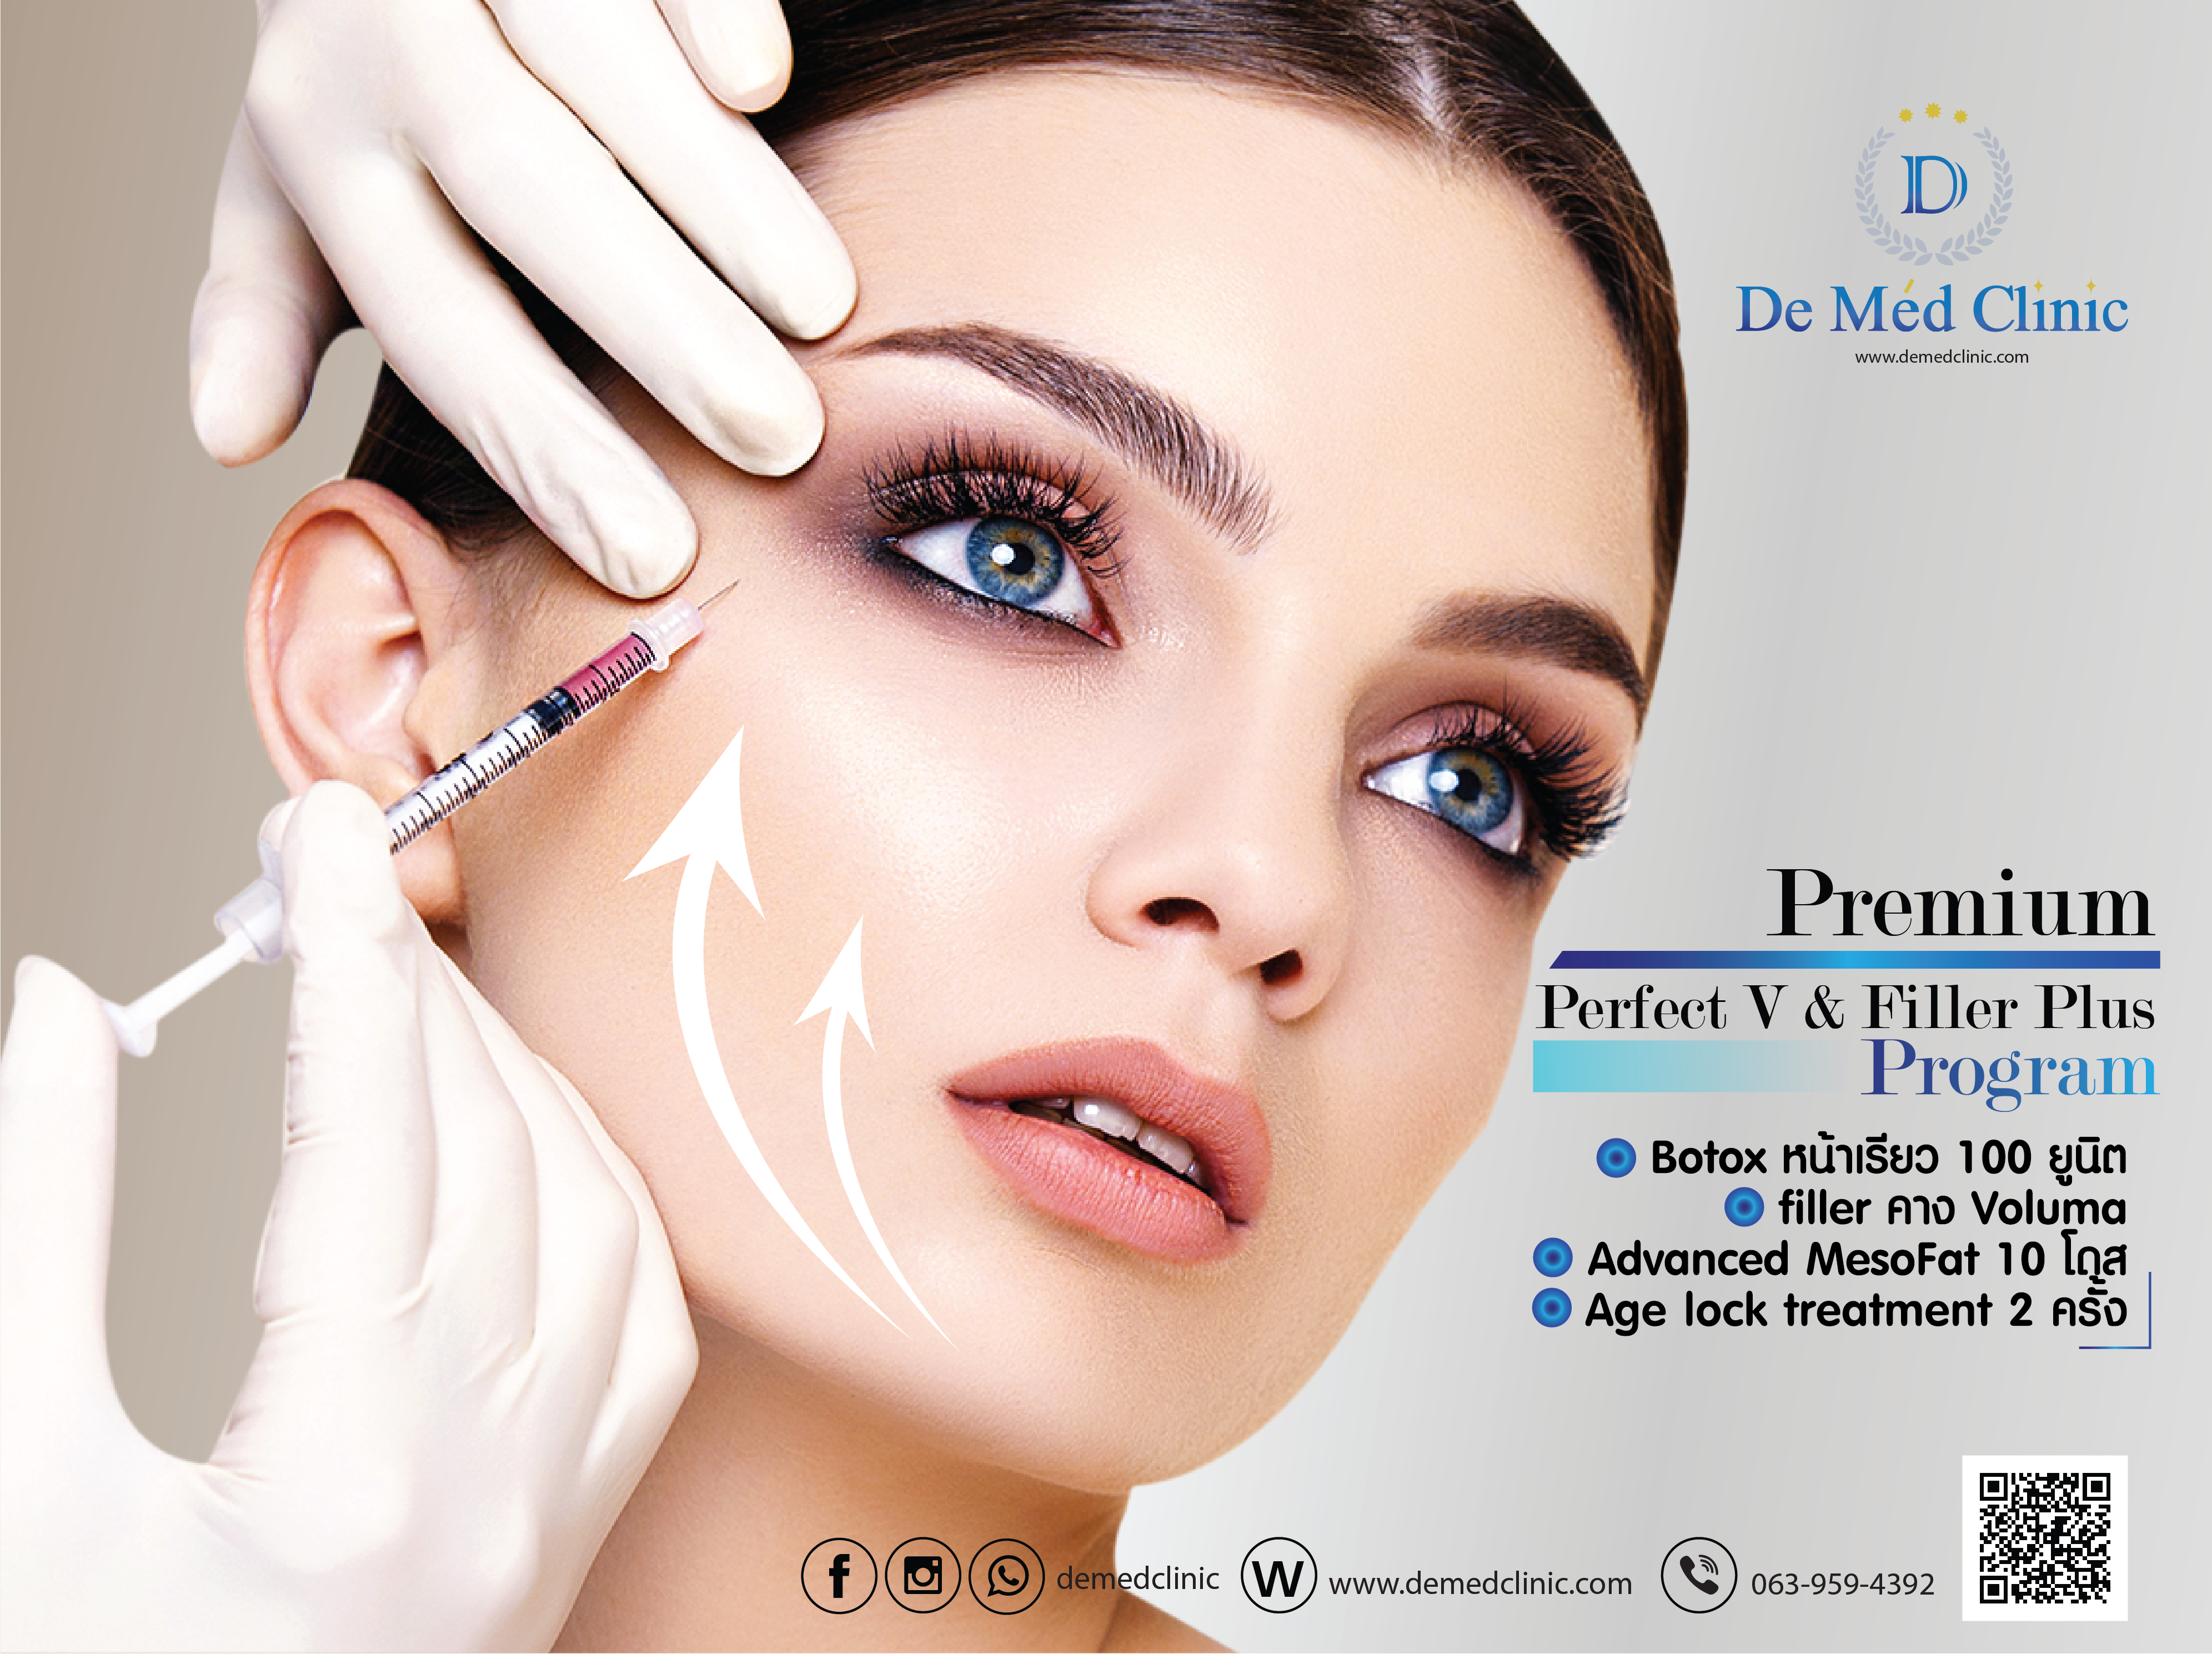 Premium Perfect V & Filler Plus Program by De Med Clinic